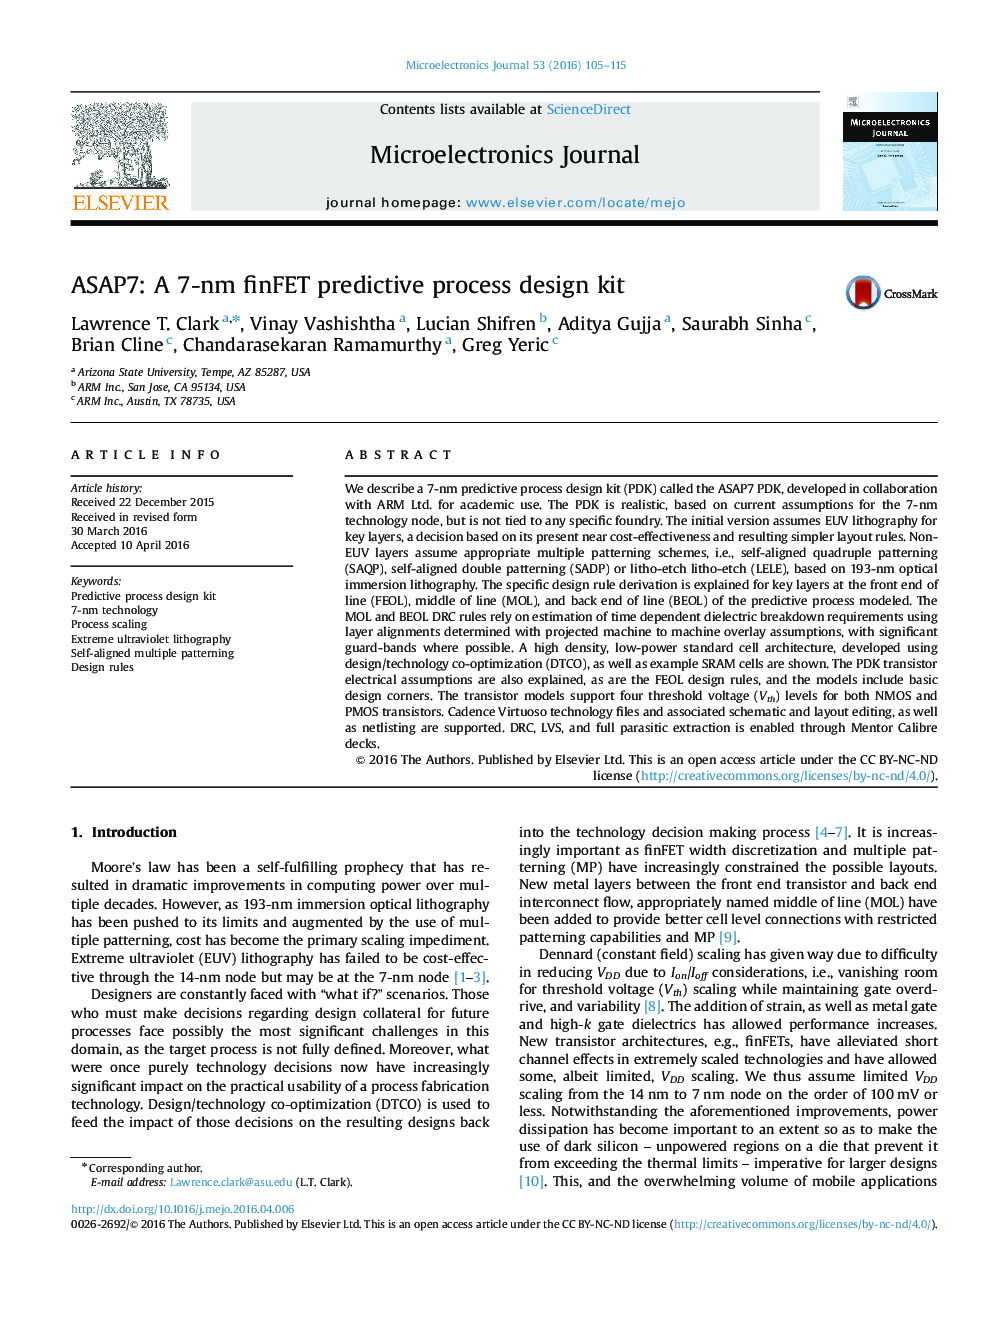 ASAP7: A 7-nm finFET predictive process design kit